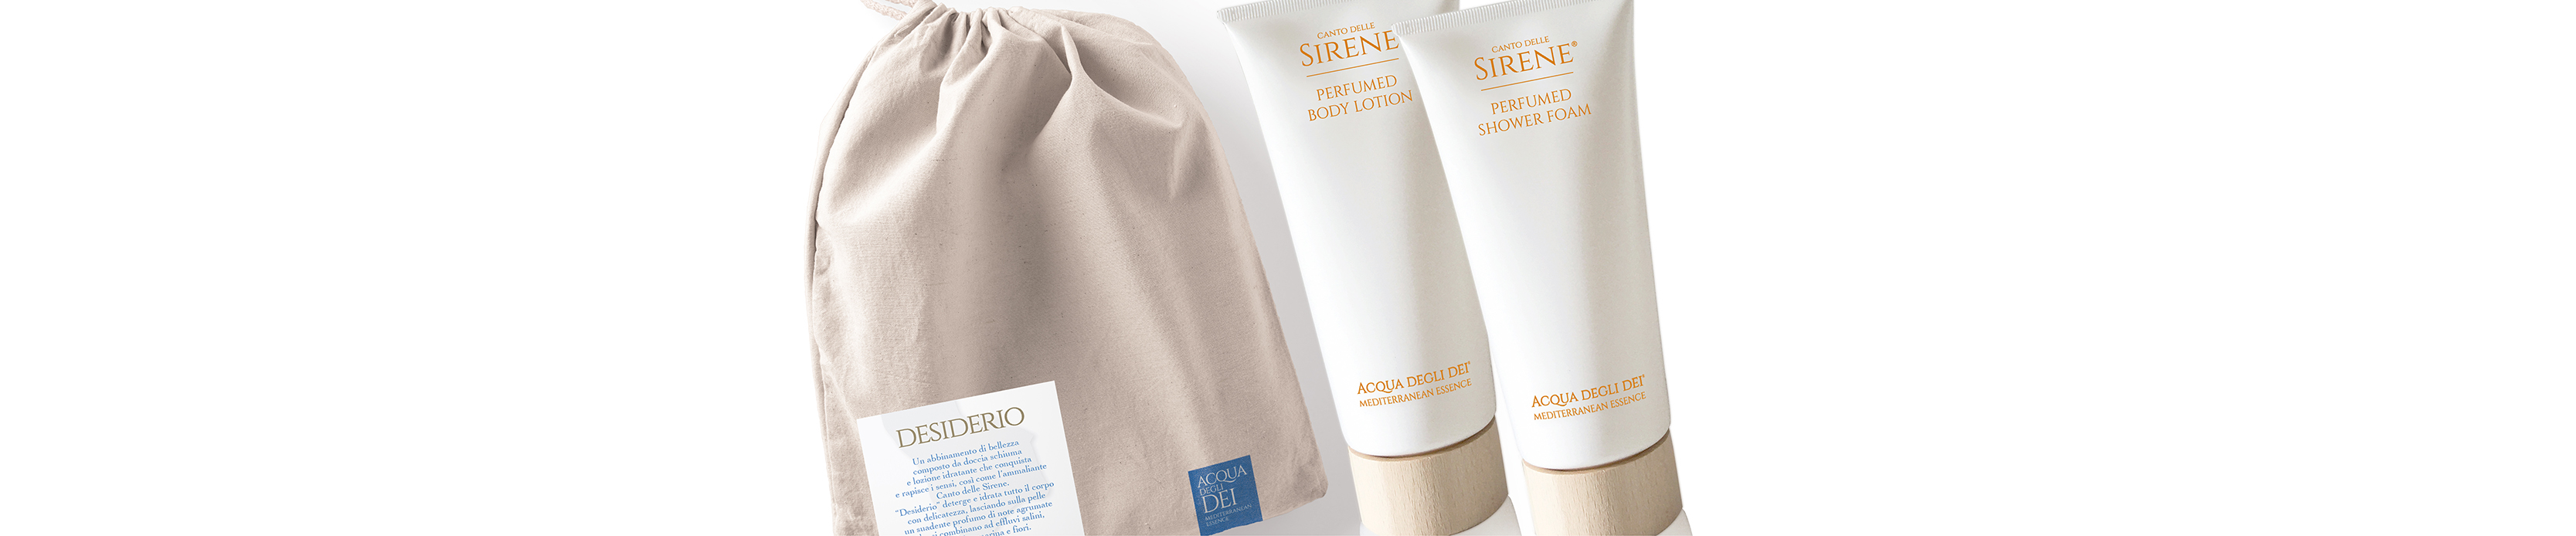 Desire body lotion and shower Canto delle sirene is sold in the practical reusable Acqua degli Dei clutch bag. 